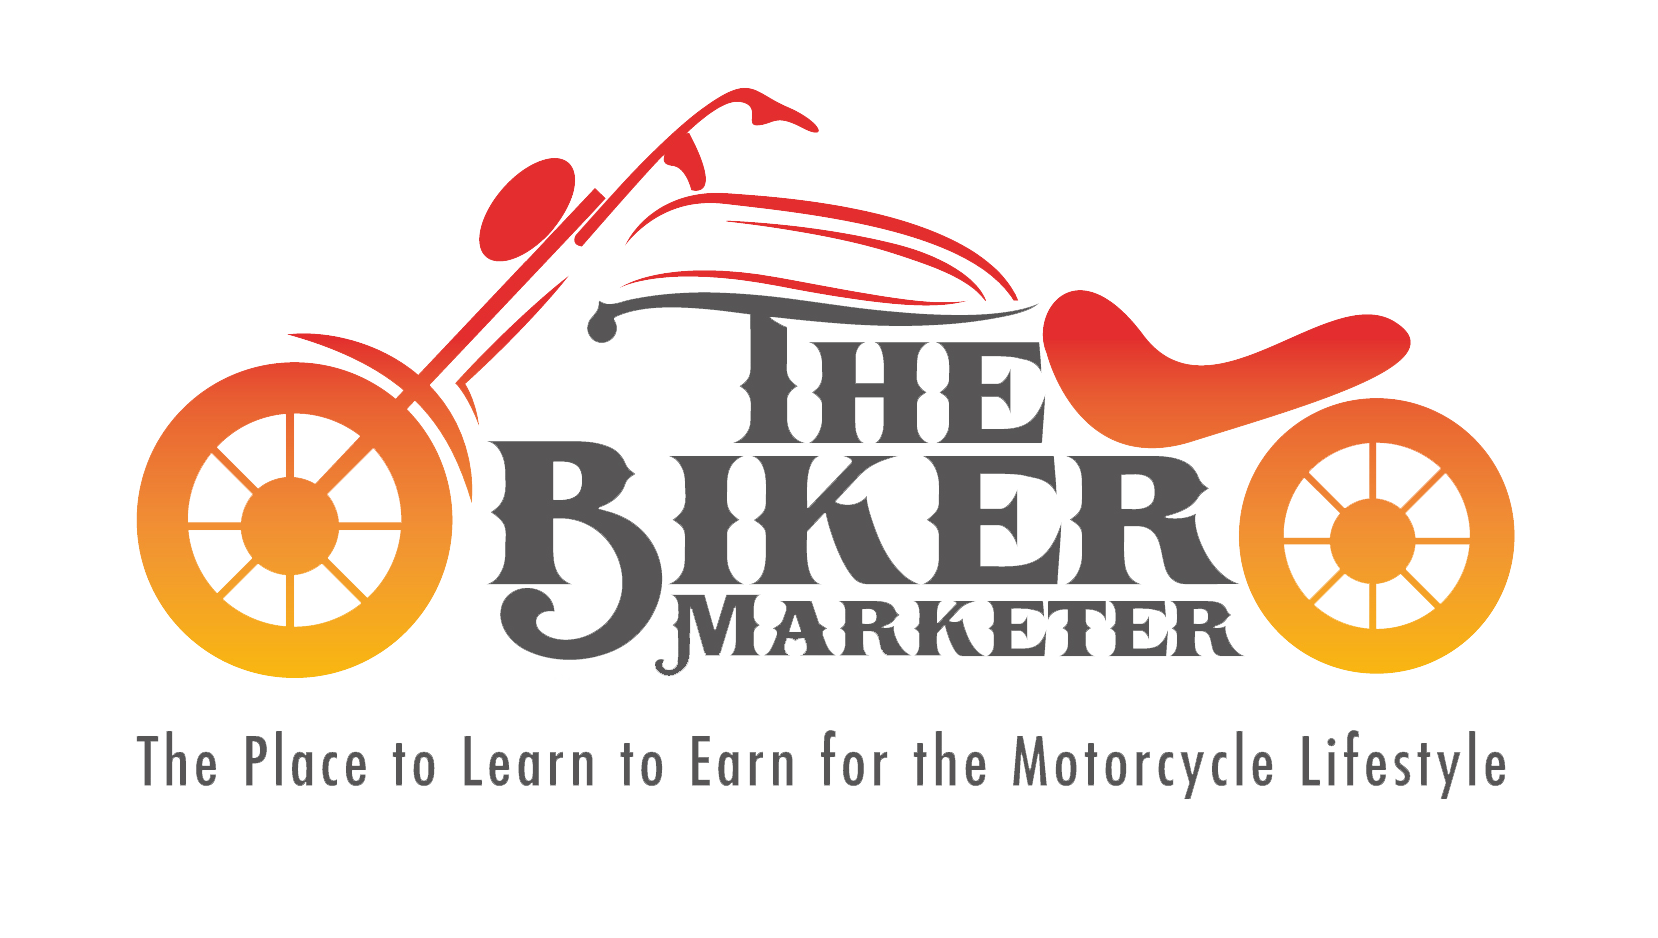 The Biker Marketer Method